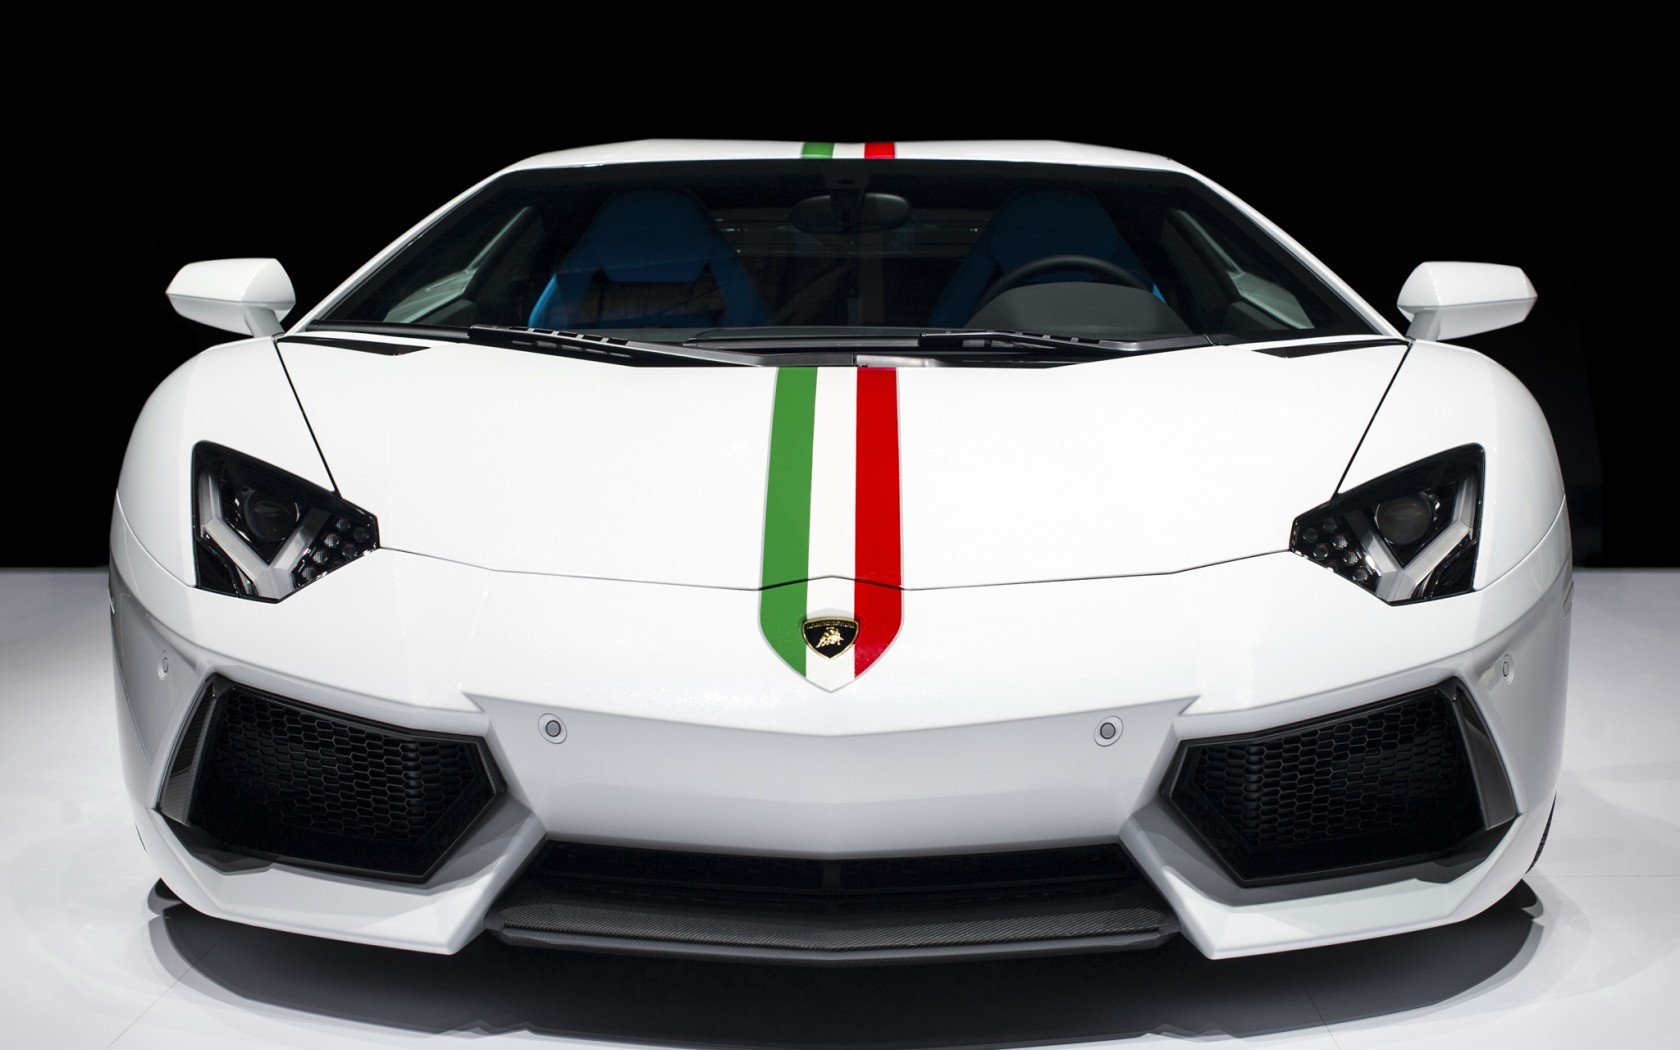 General 1680x1050 Lamborghini white cars car vehicle dark background Lamborghini Aventador italian cars Volkswagen Group